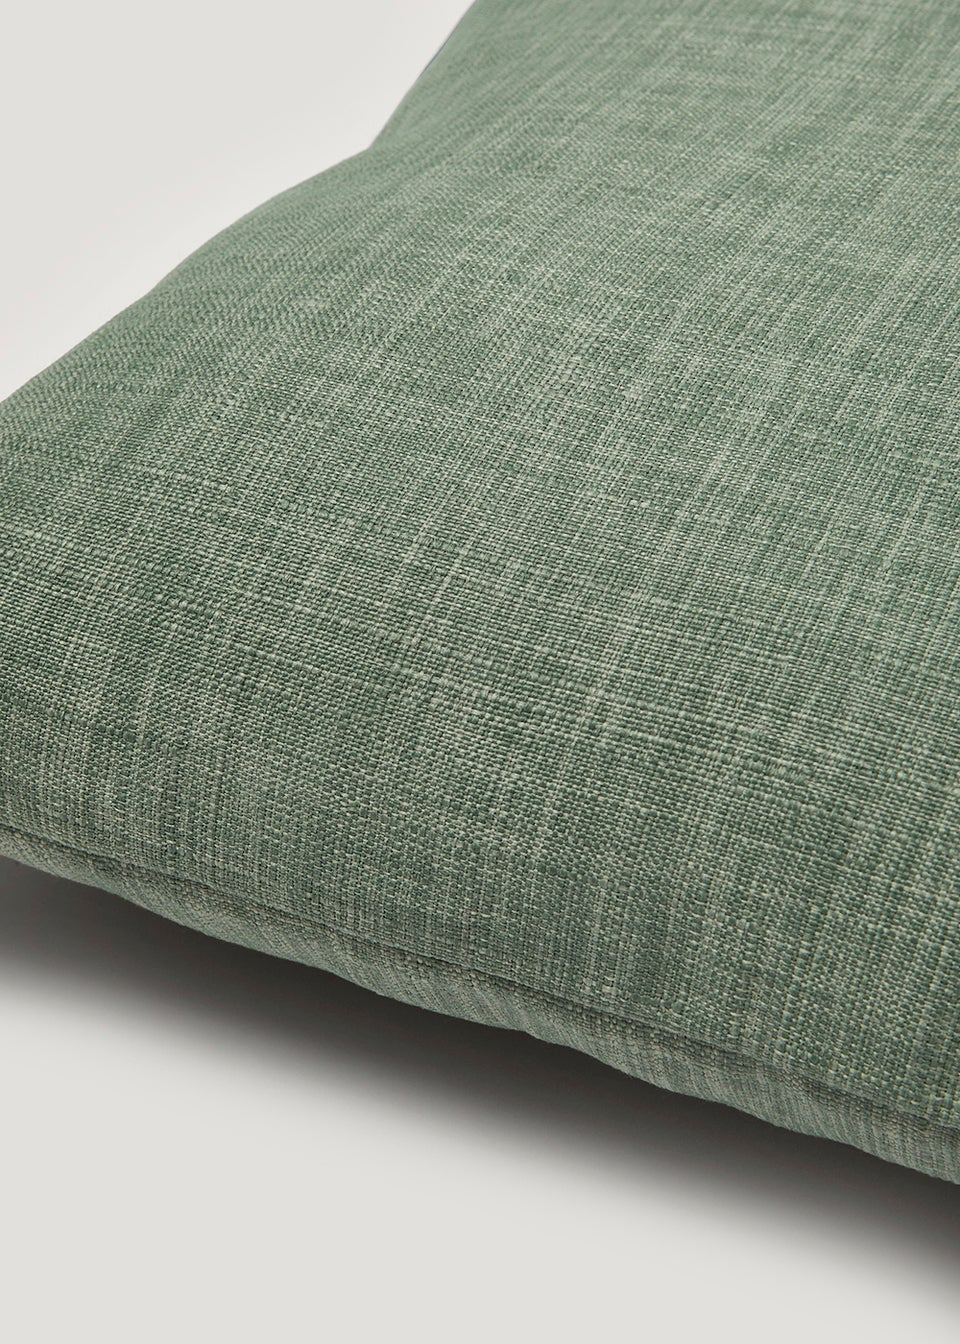 Green Linen-Look Cushion (43cm x 43cm)